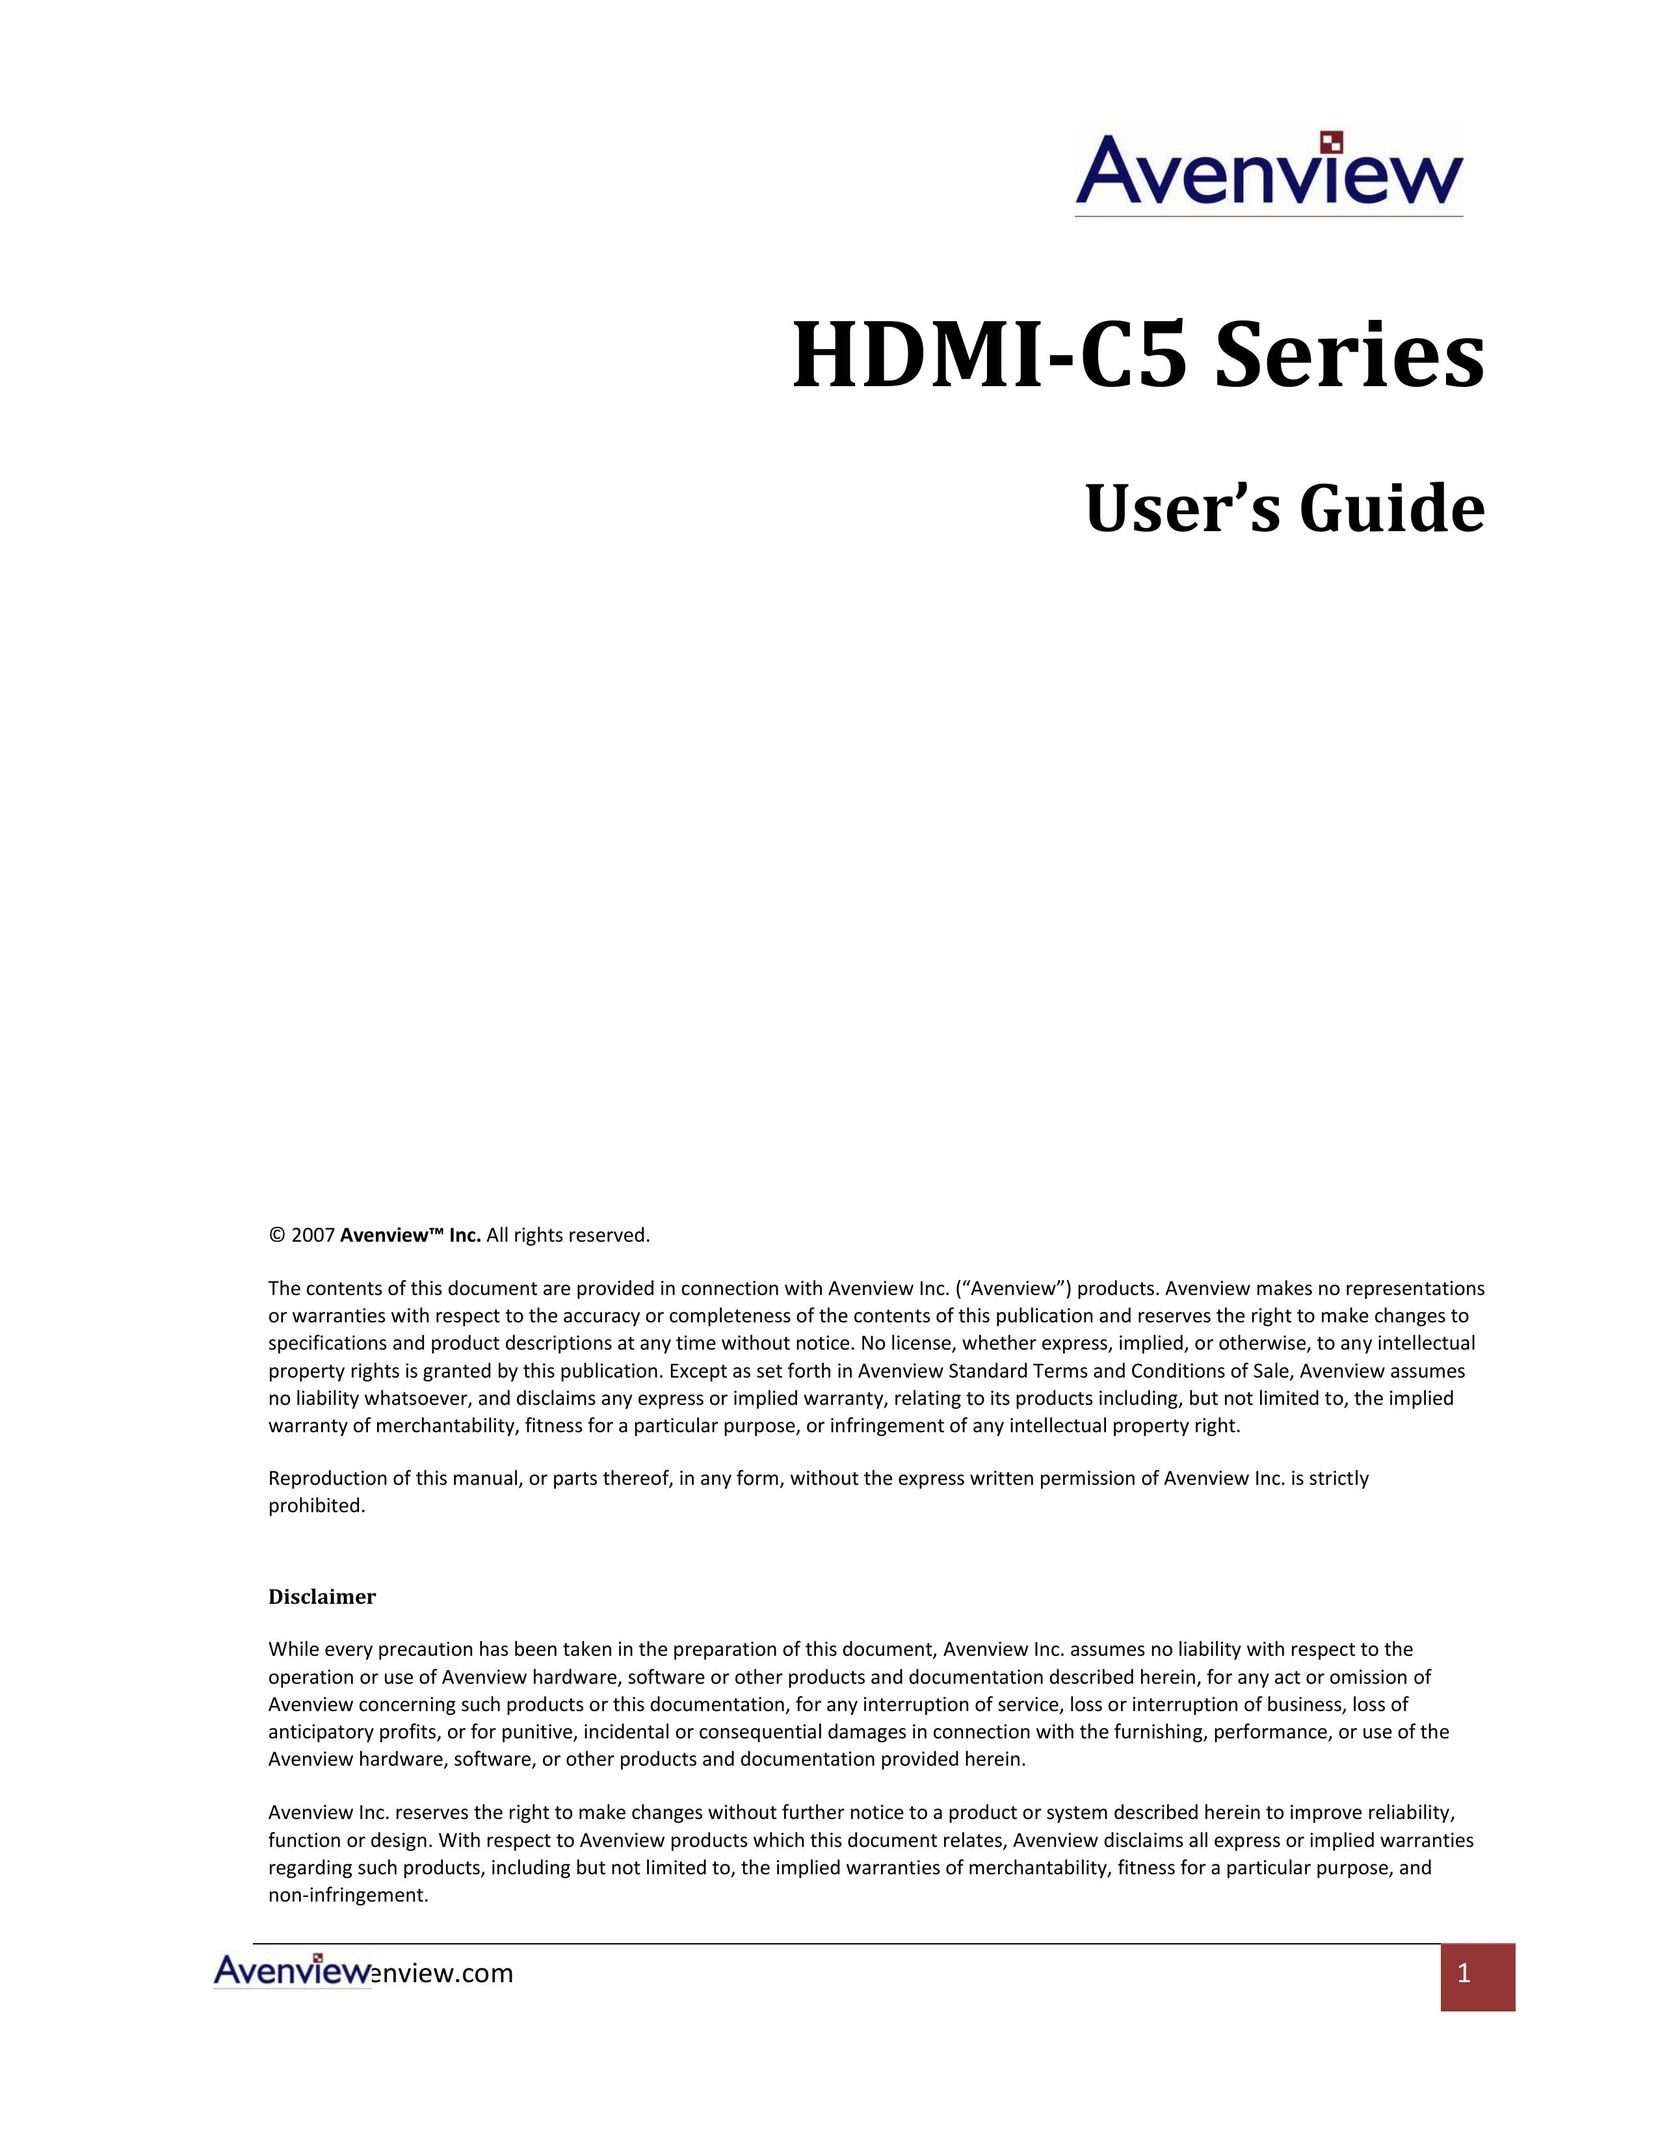 Avenview HDMI-C5 Computer Drive User Manual